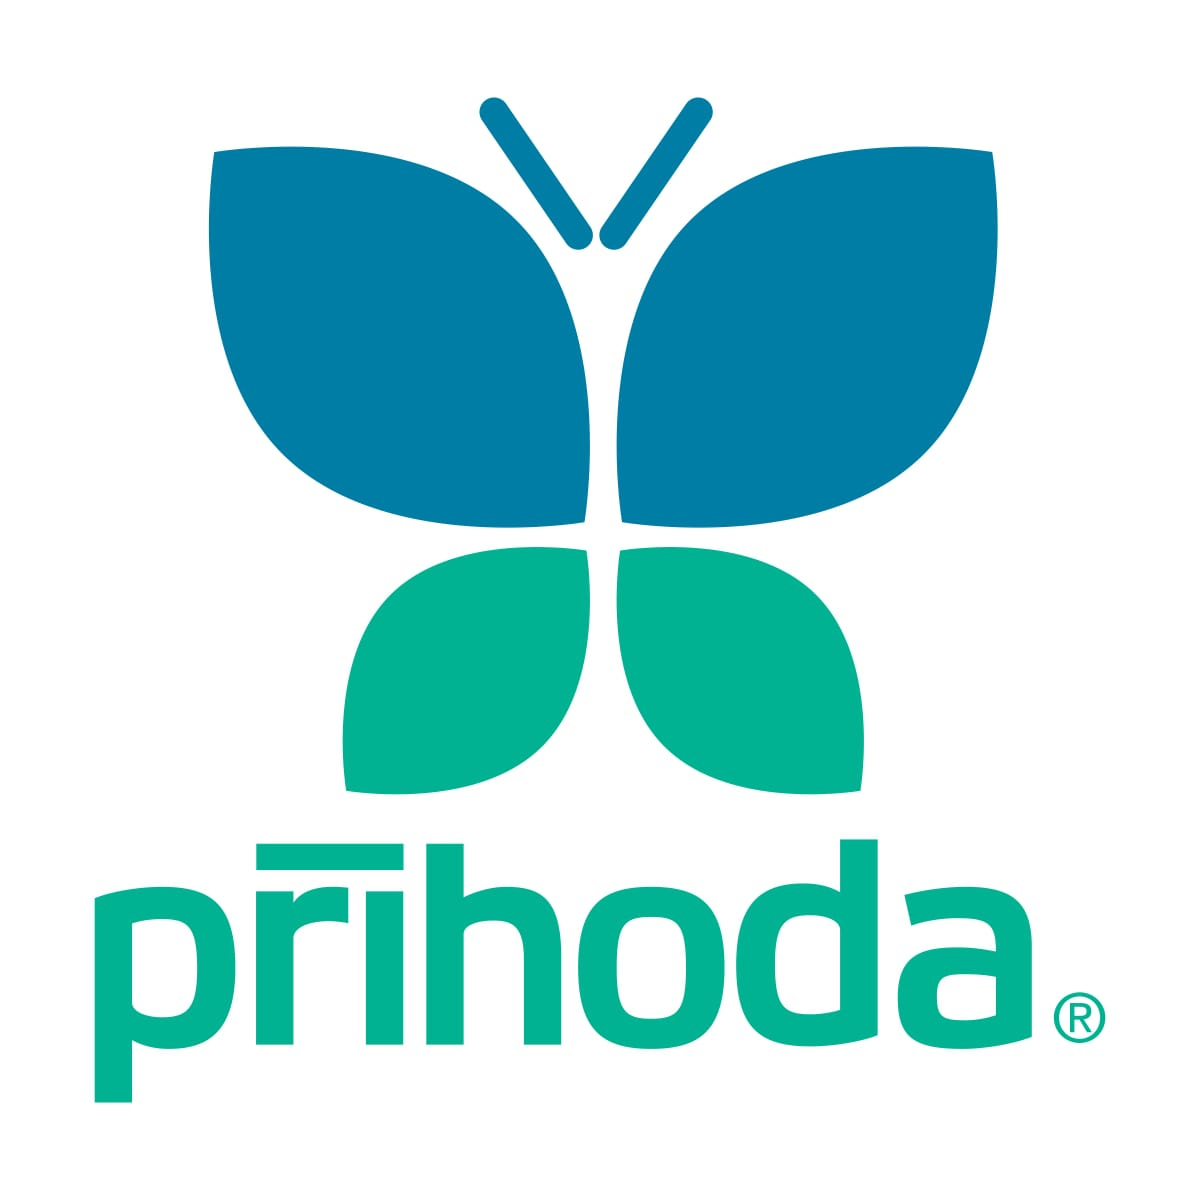 M/s. Prihoda India Pvt. Ltd